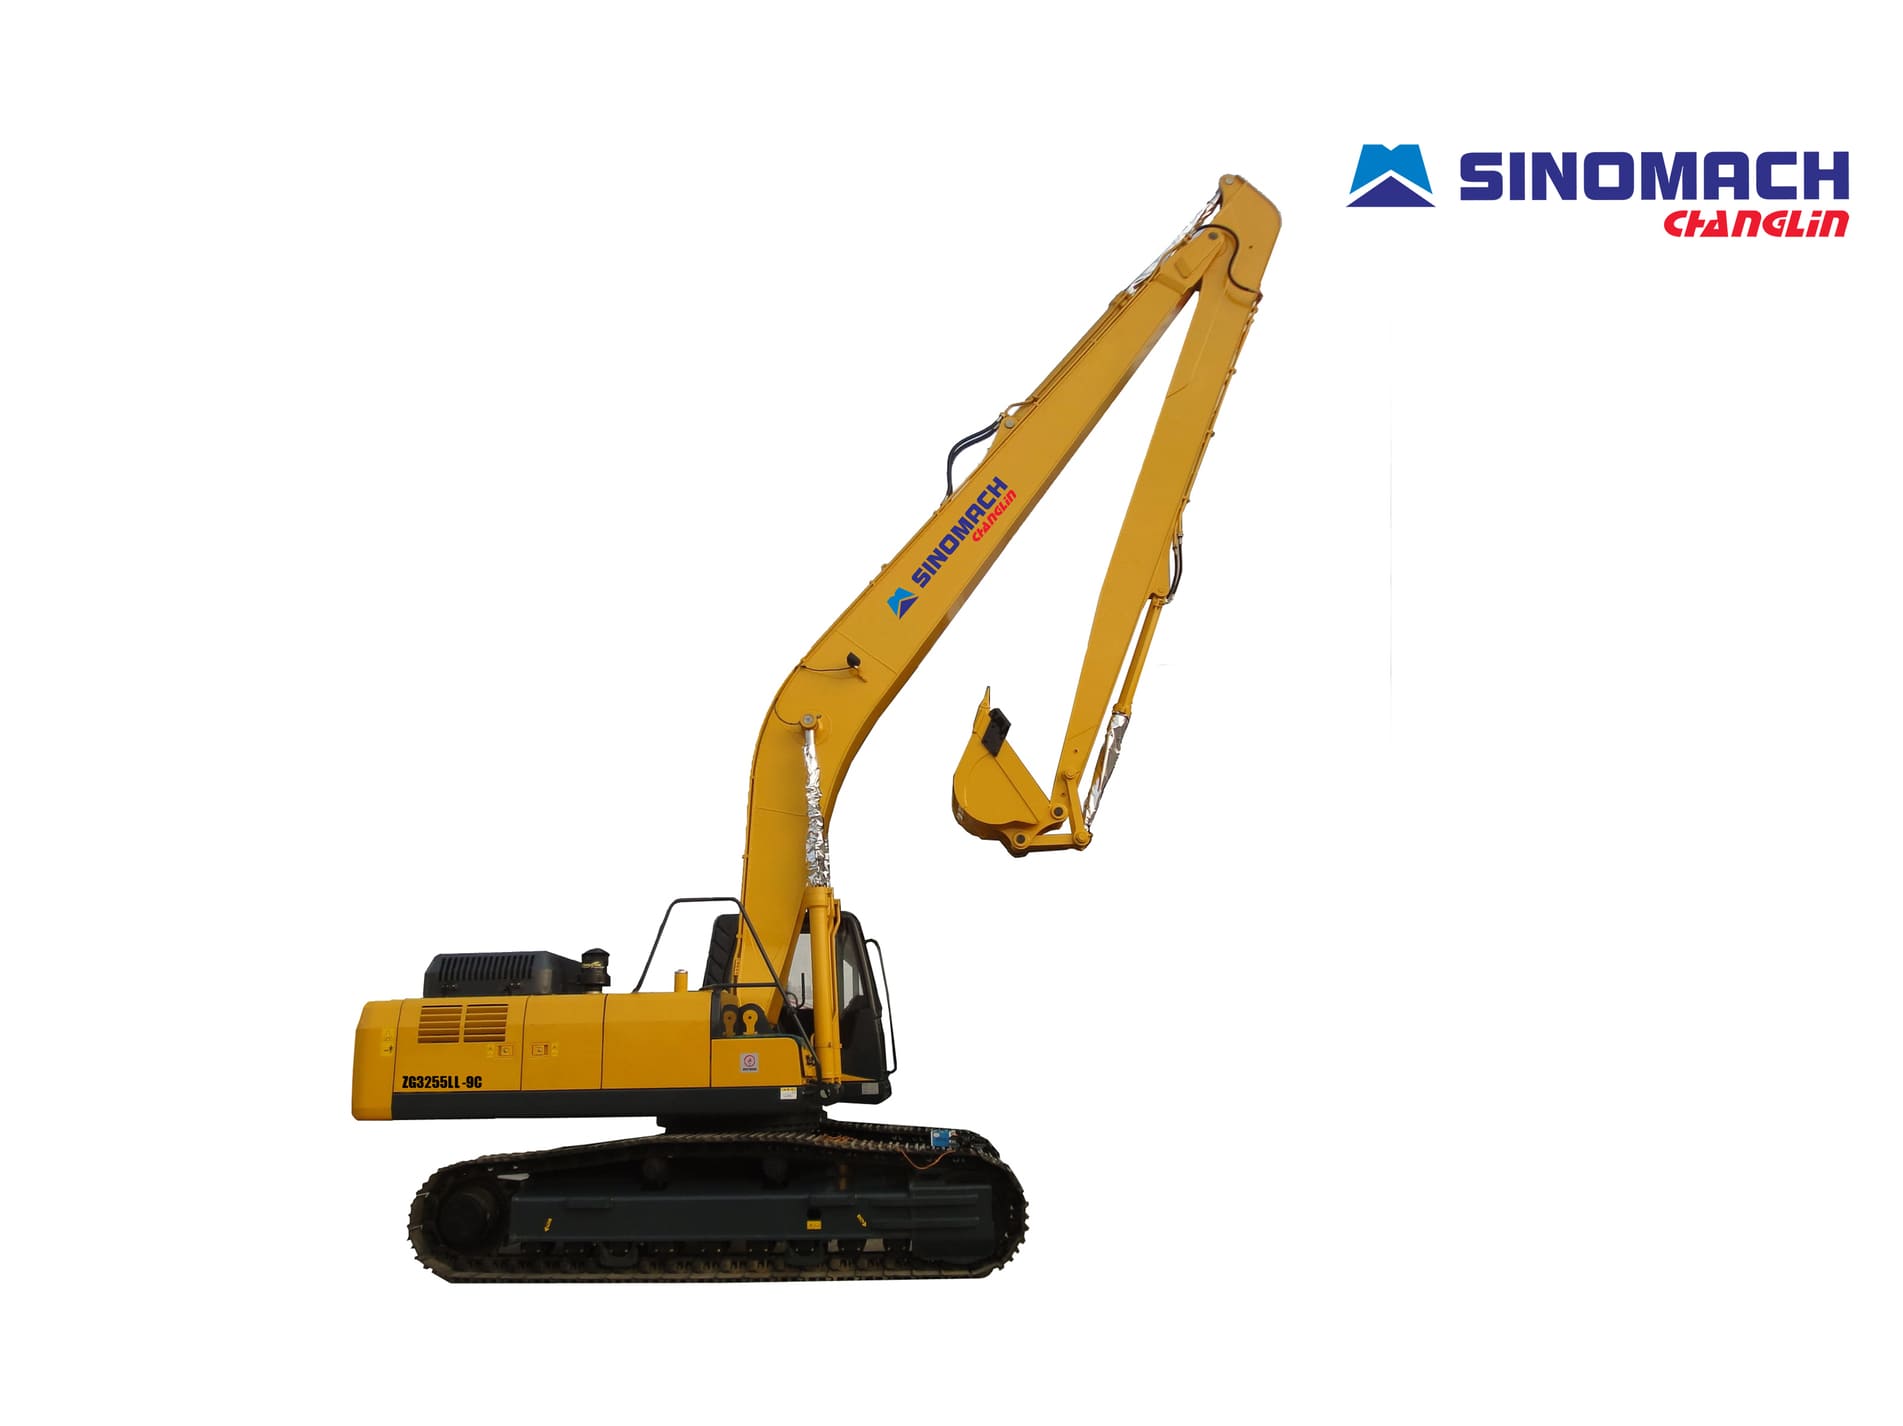 Excavator Sinimach Changlin Longarm Zg3255ll 9c Sm